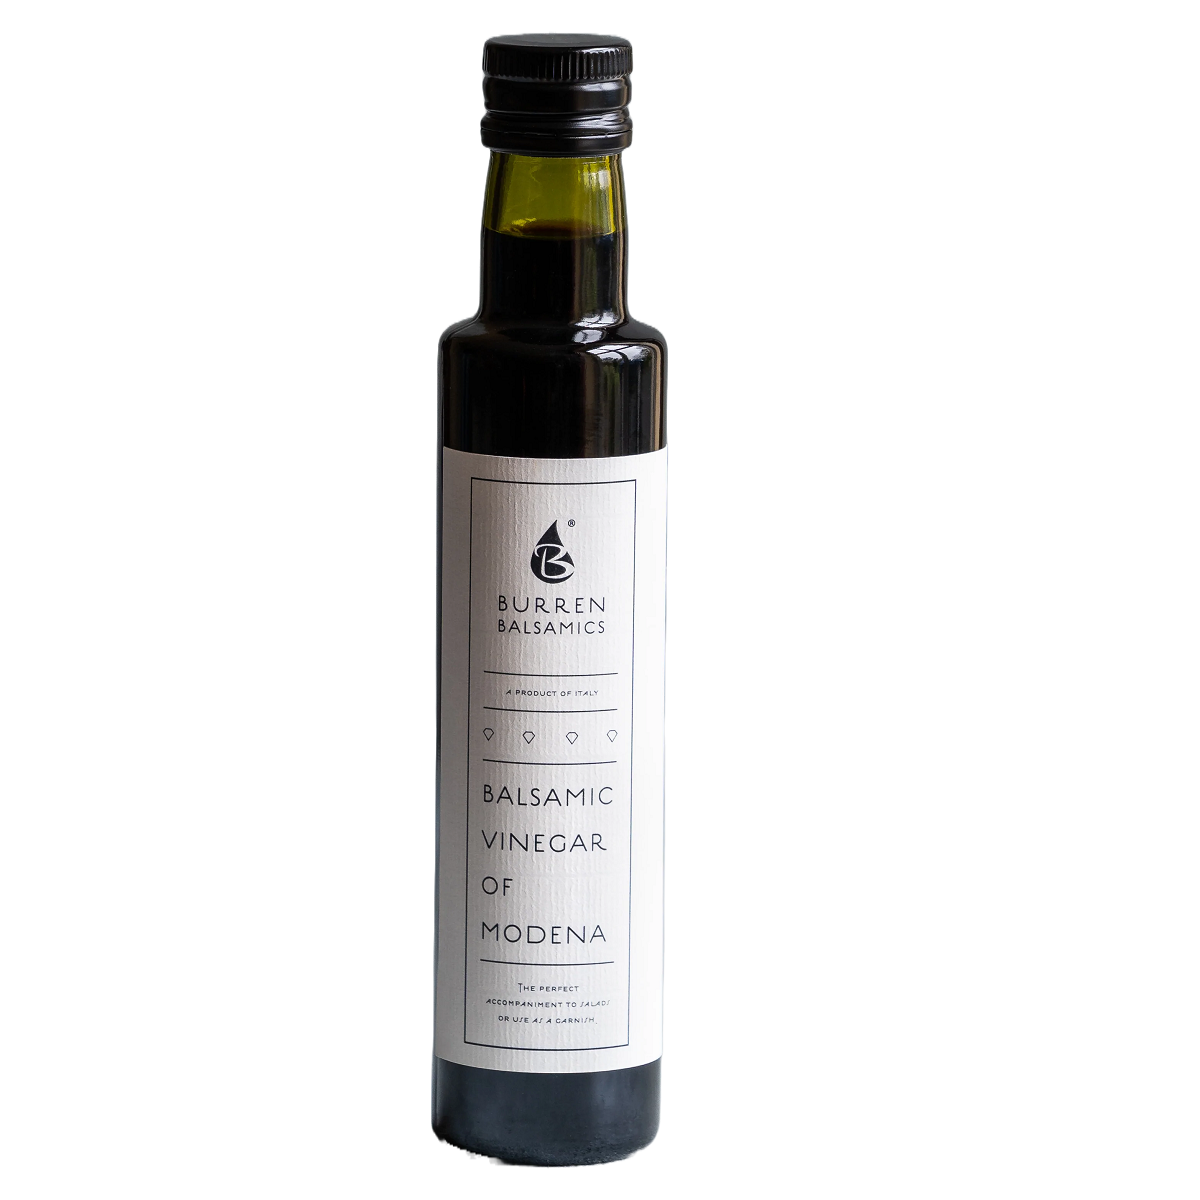 Burren Balsamics Balsamic Vinegar of Modena 250ml